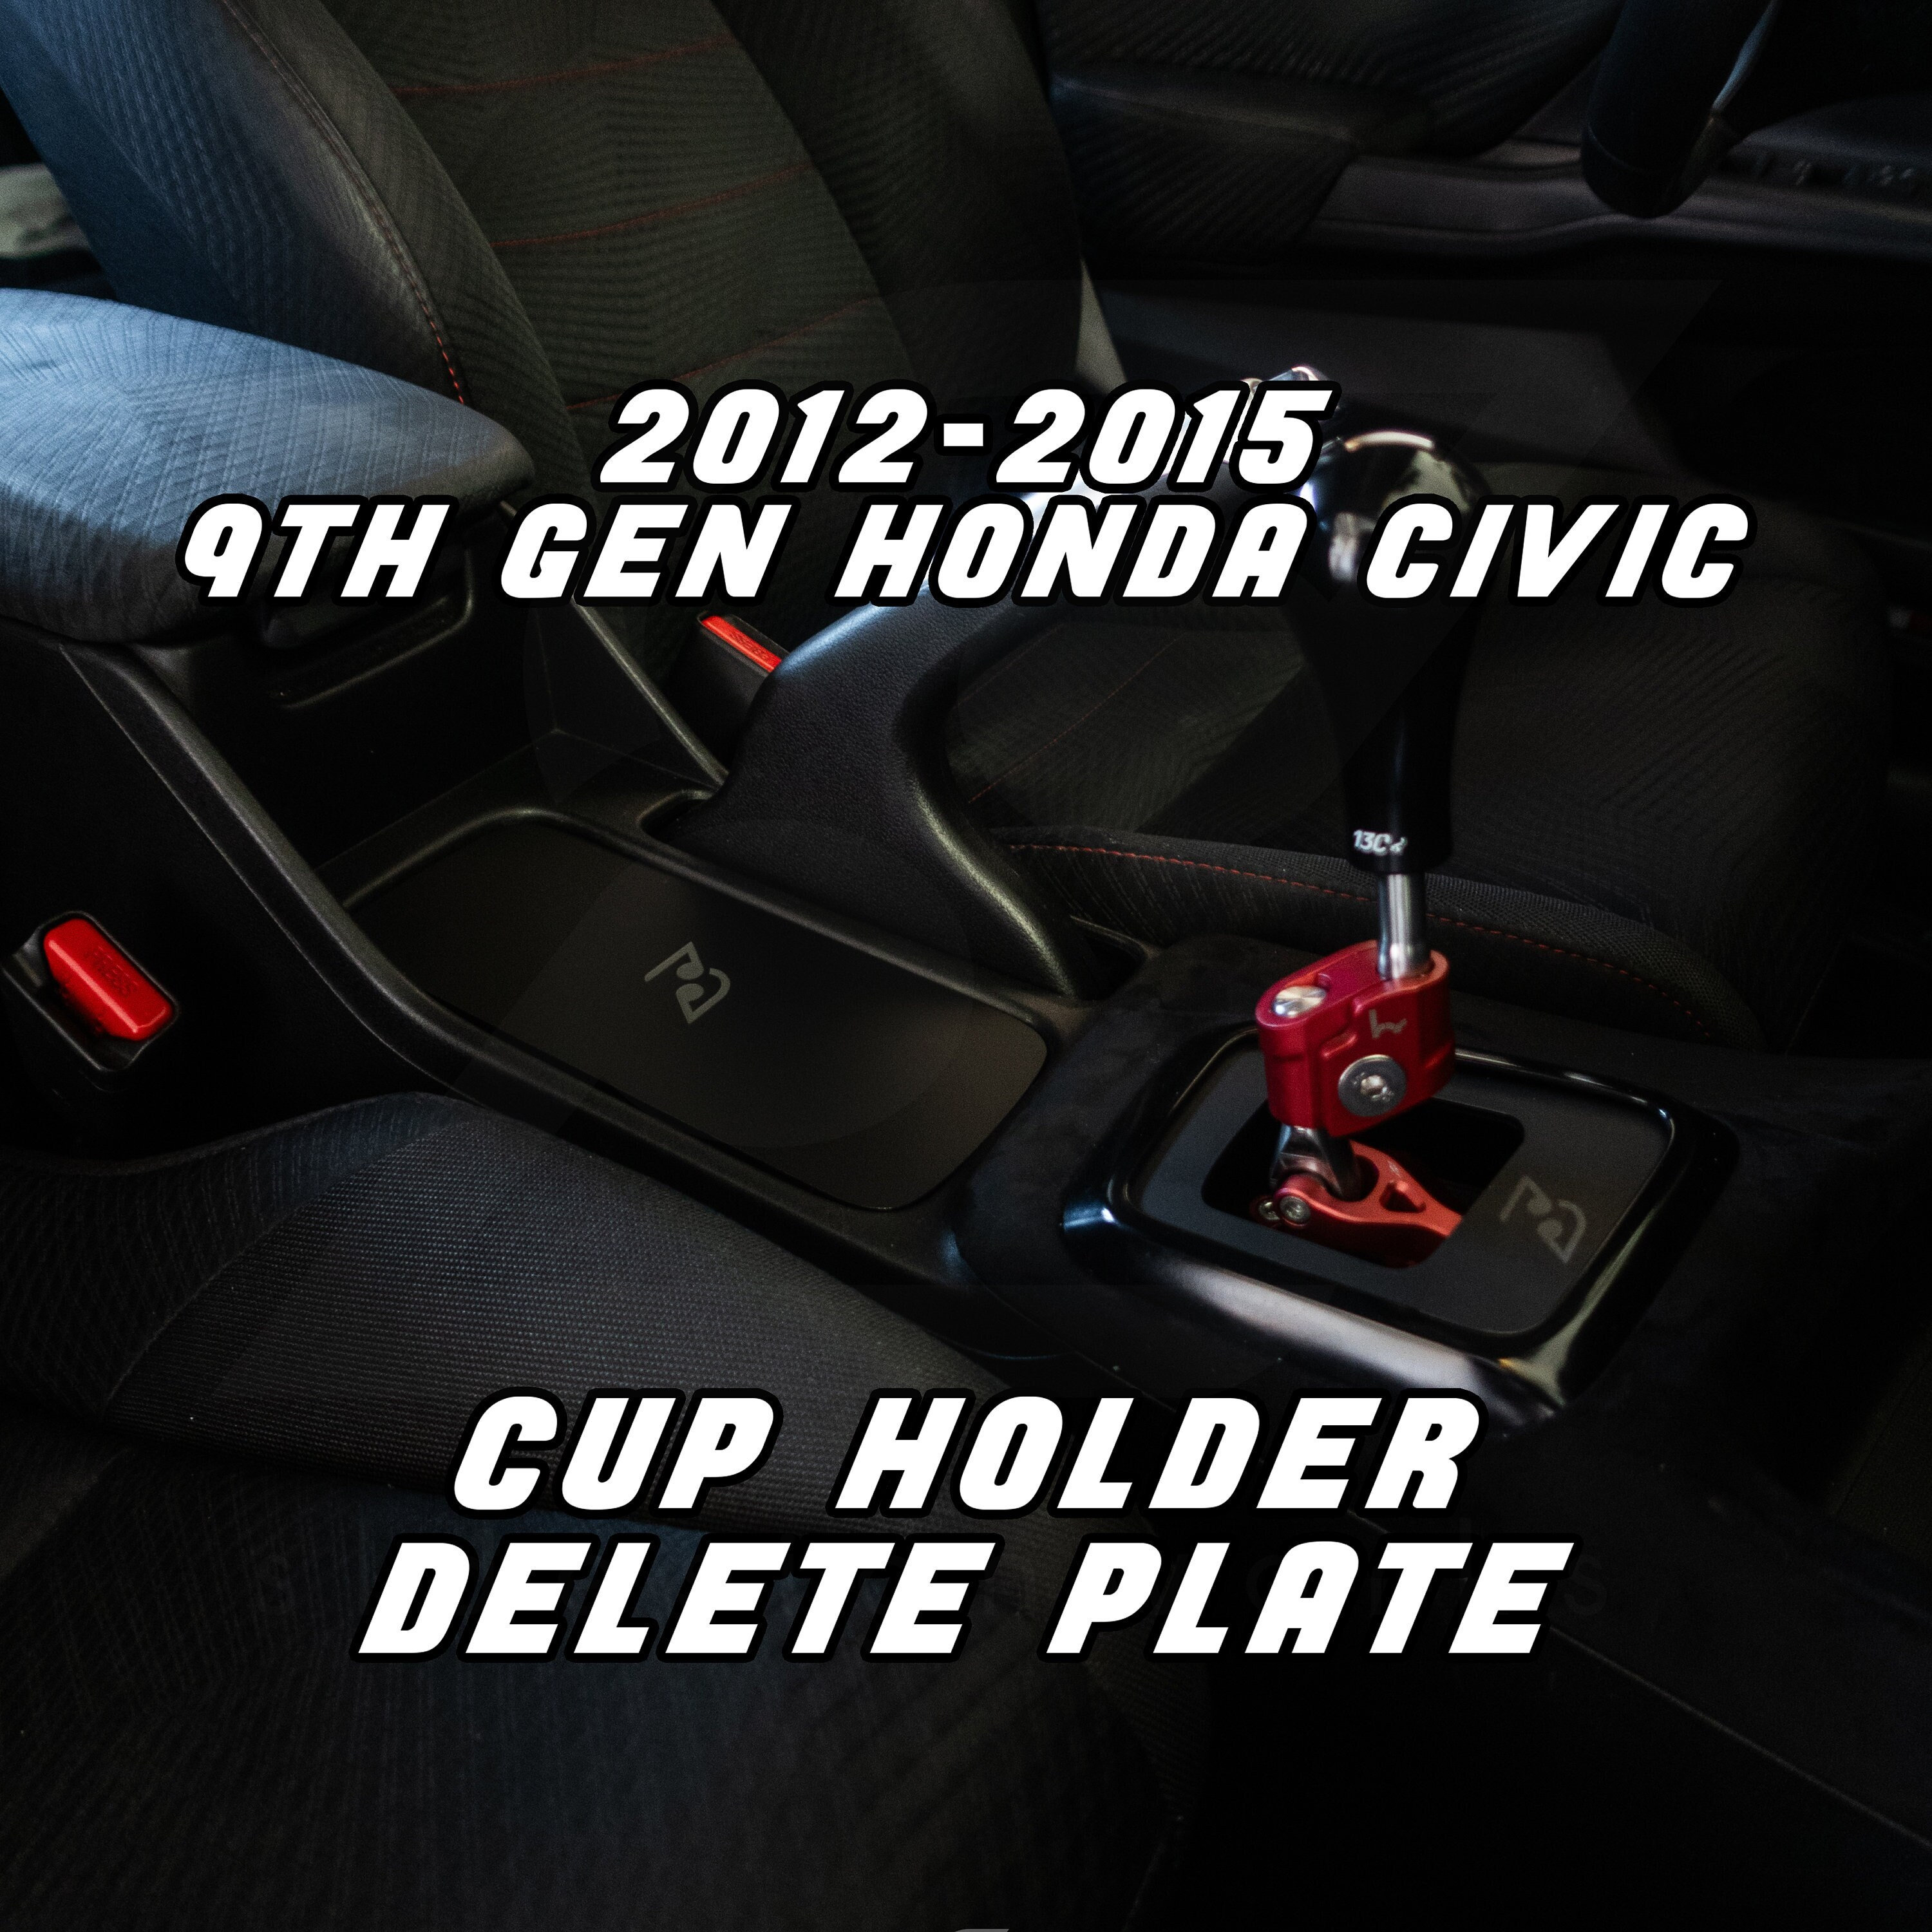 Honda Civic Interior 